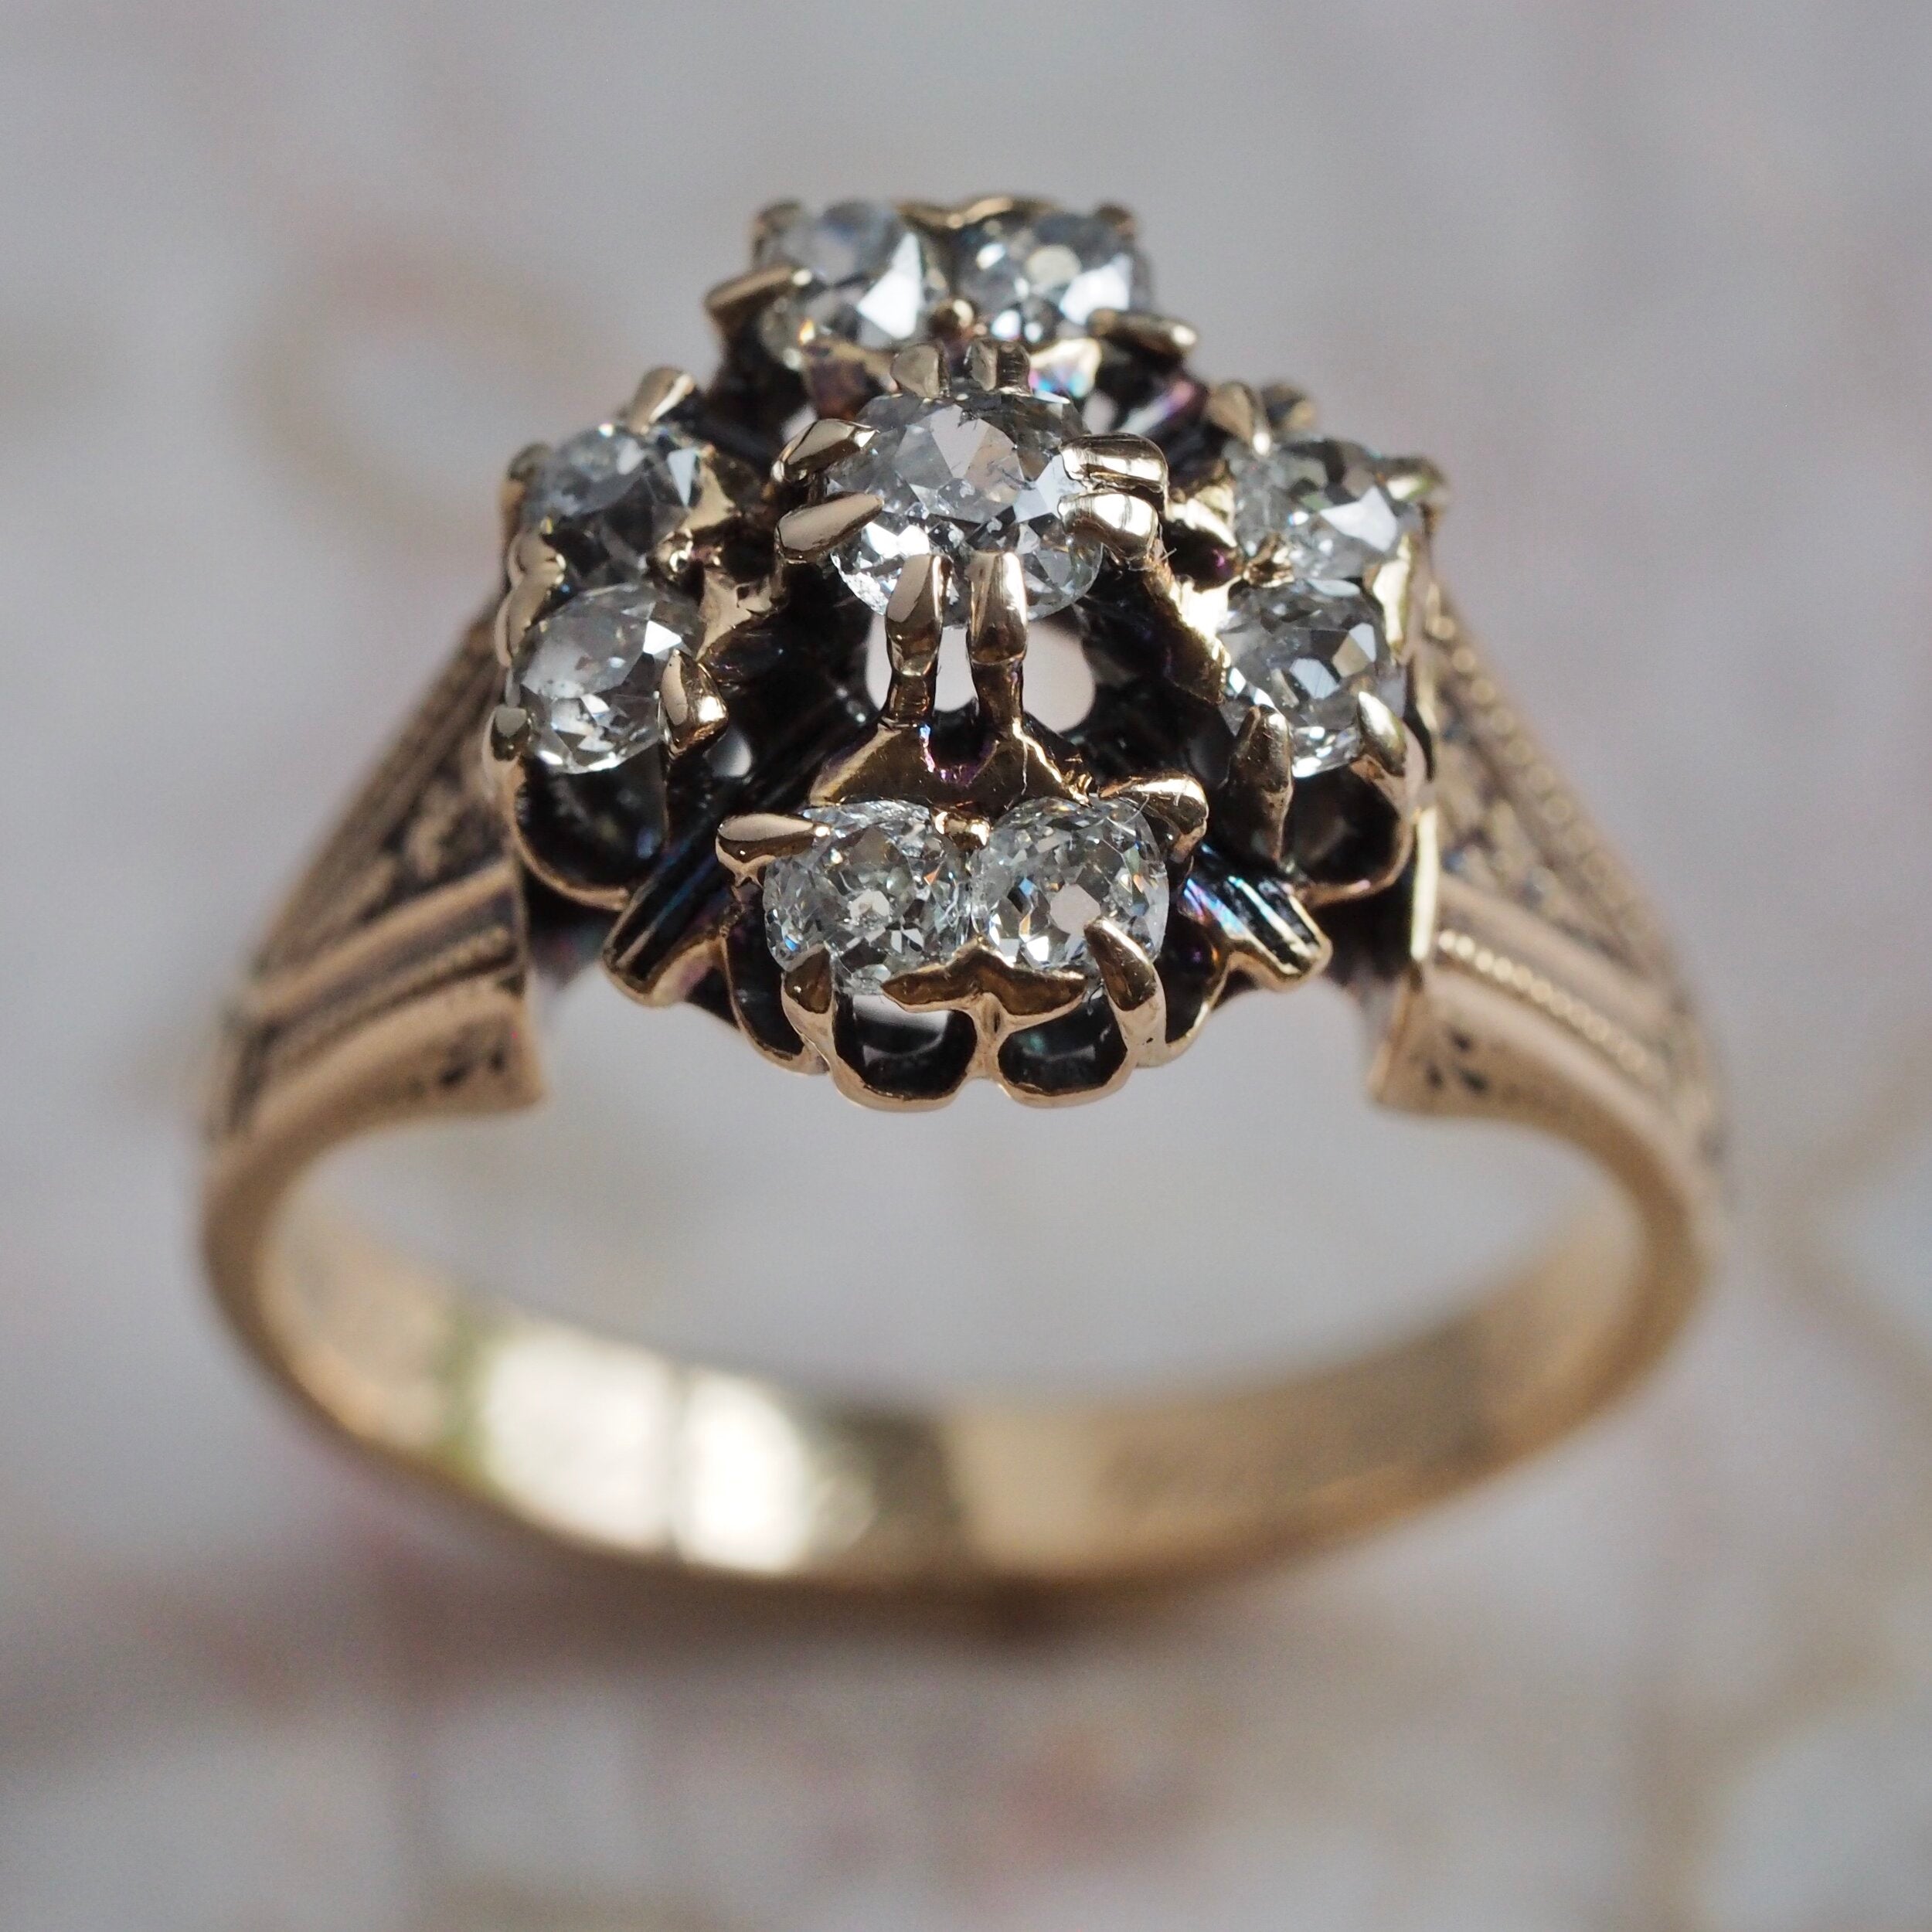 Antique Victorian c. 1872 14k Gold Old Mine Cut Diamond Engagement Ring